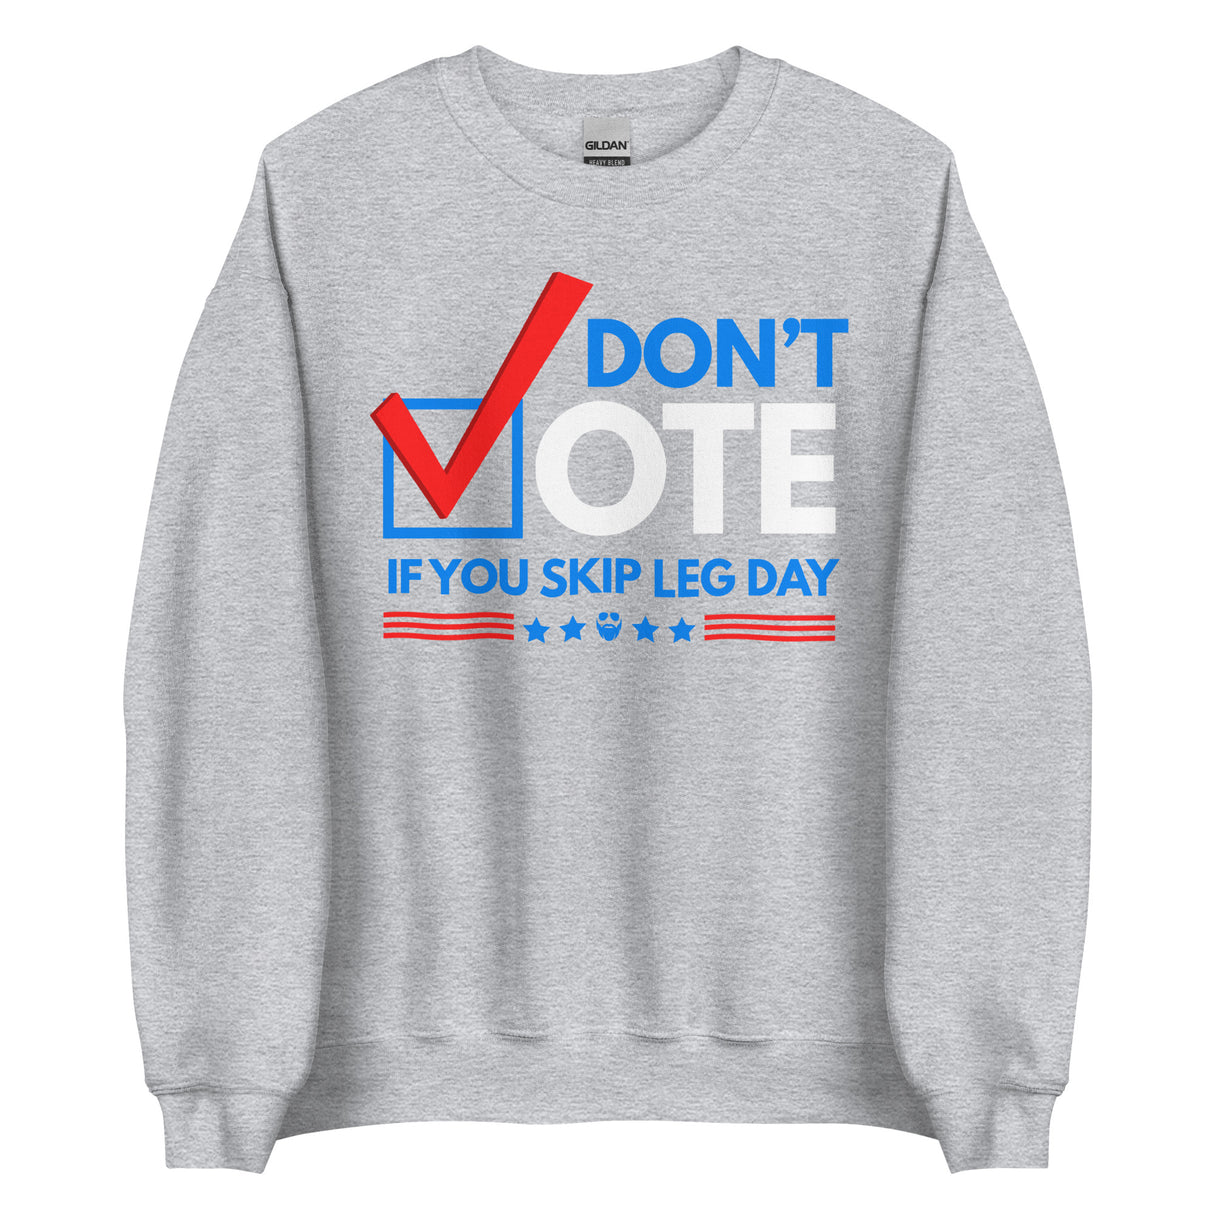 Don't Vote If You Skip Leg Day Sweatshirt